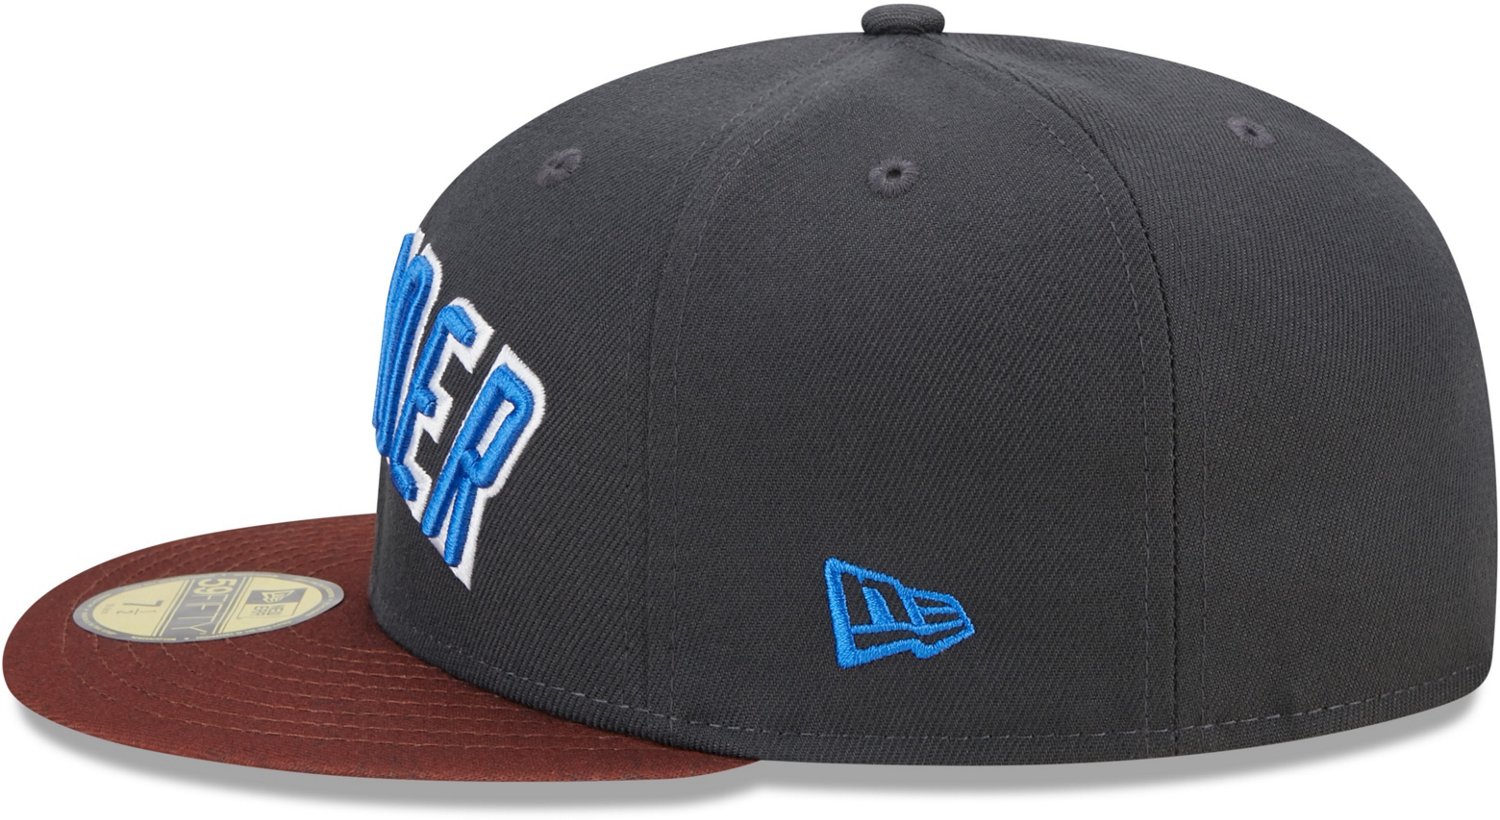 Oklahoma City Thunder New Era Black On Black 59FIFTY Fitted Hat